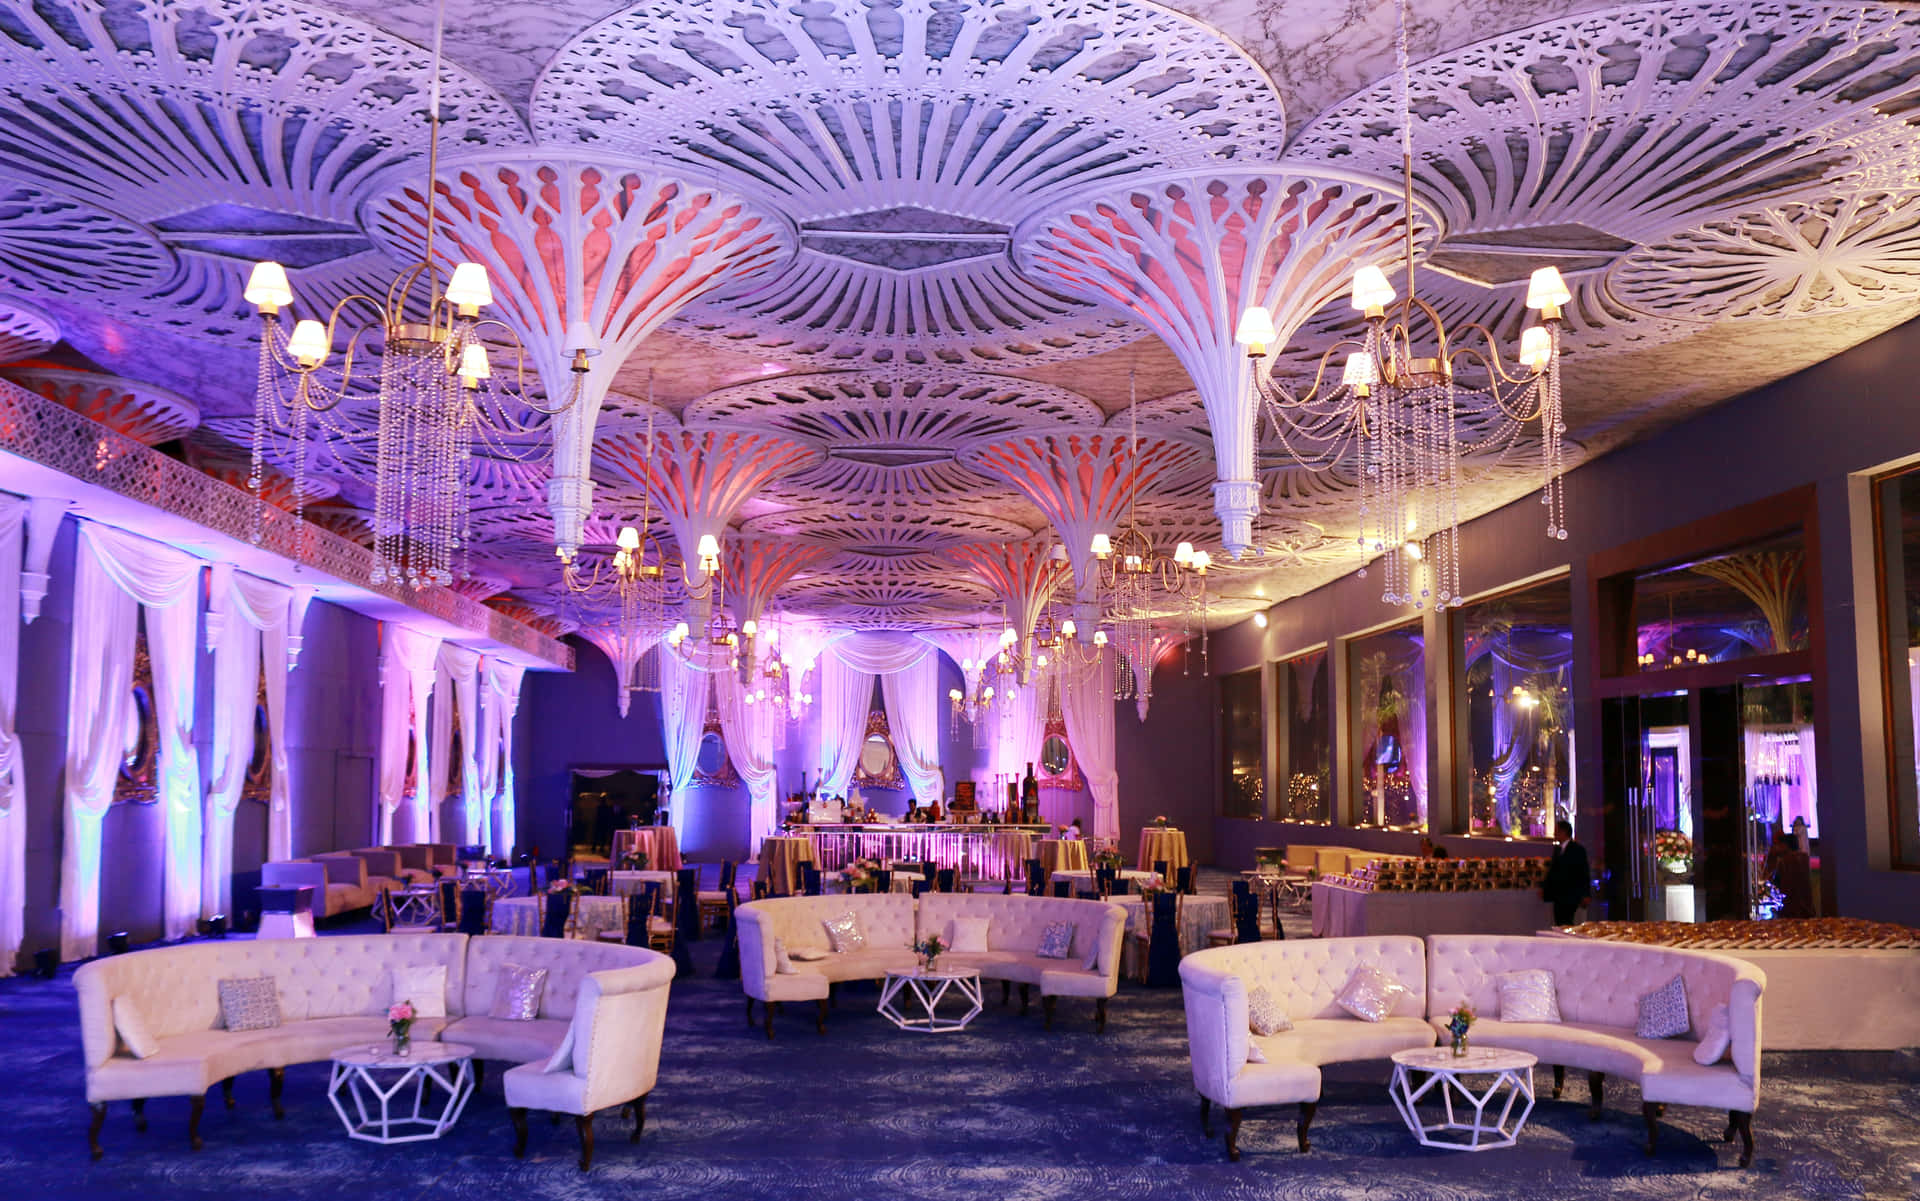 Grand Luxurious Ballroom